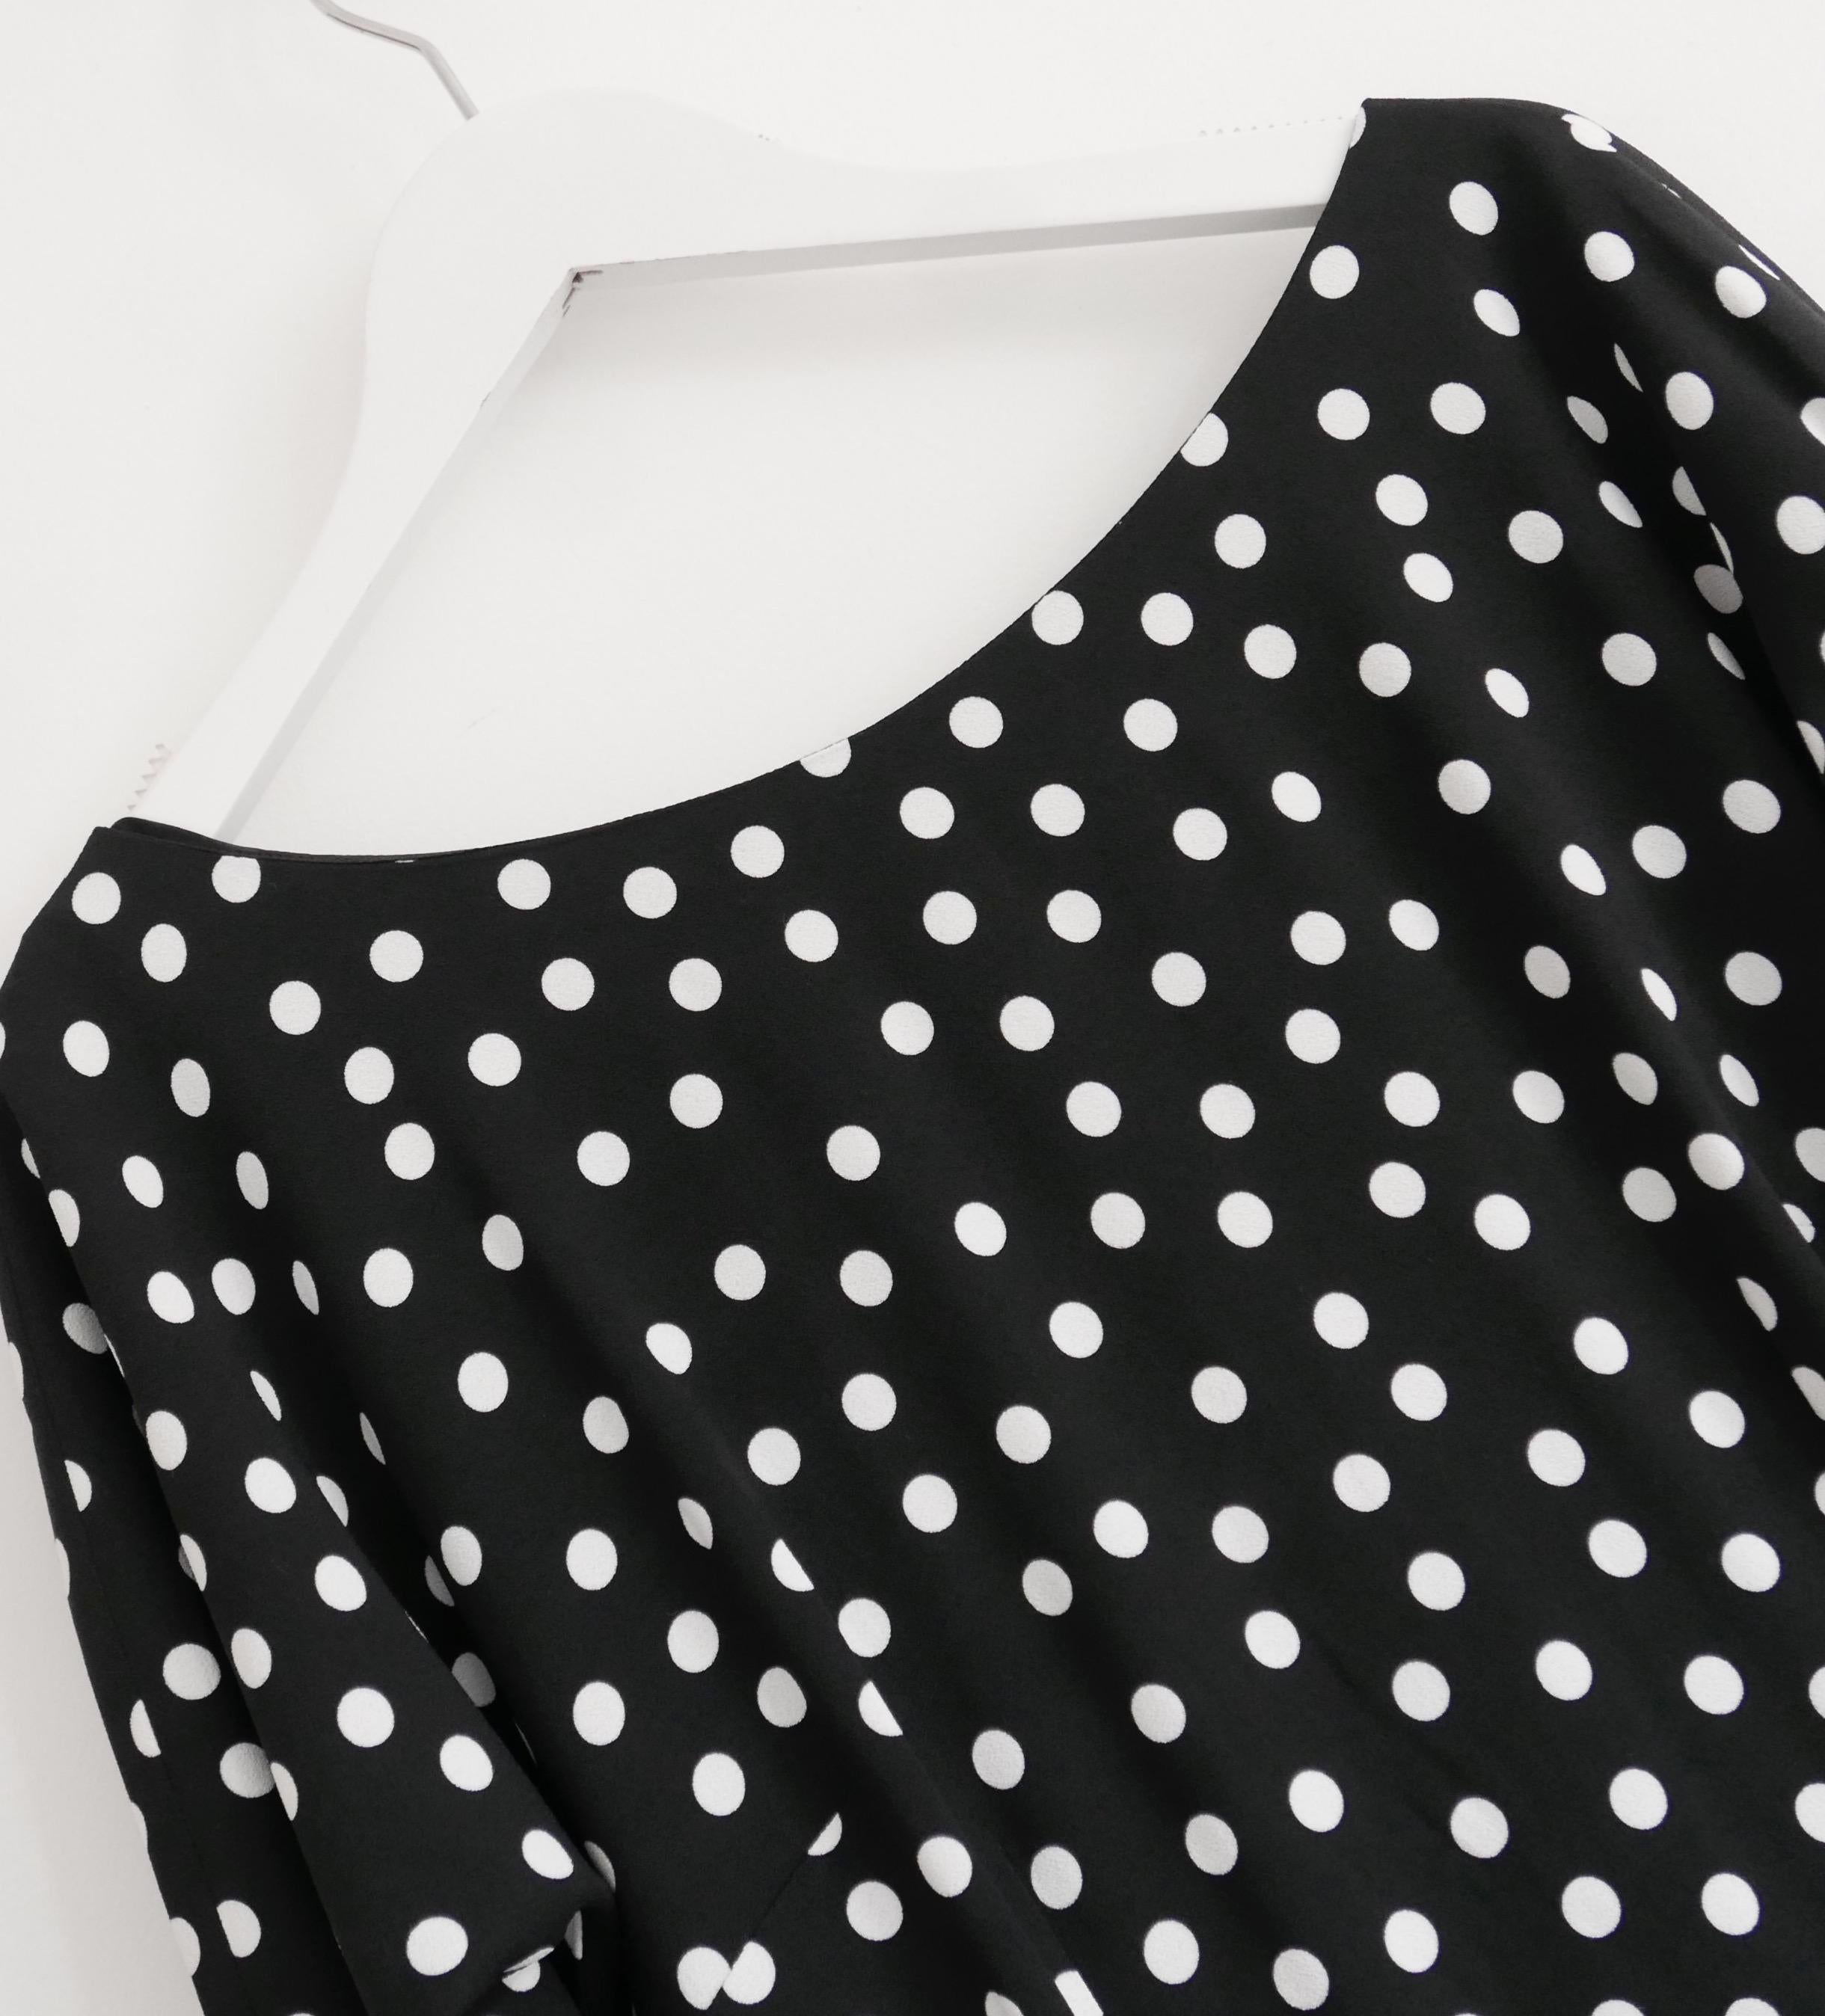 Dolce & Gabbana polka dot print sheath dress In New Condition For Sale In London, GB